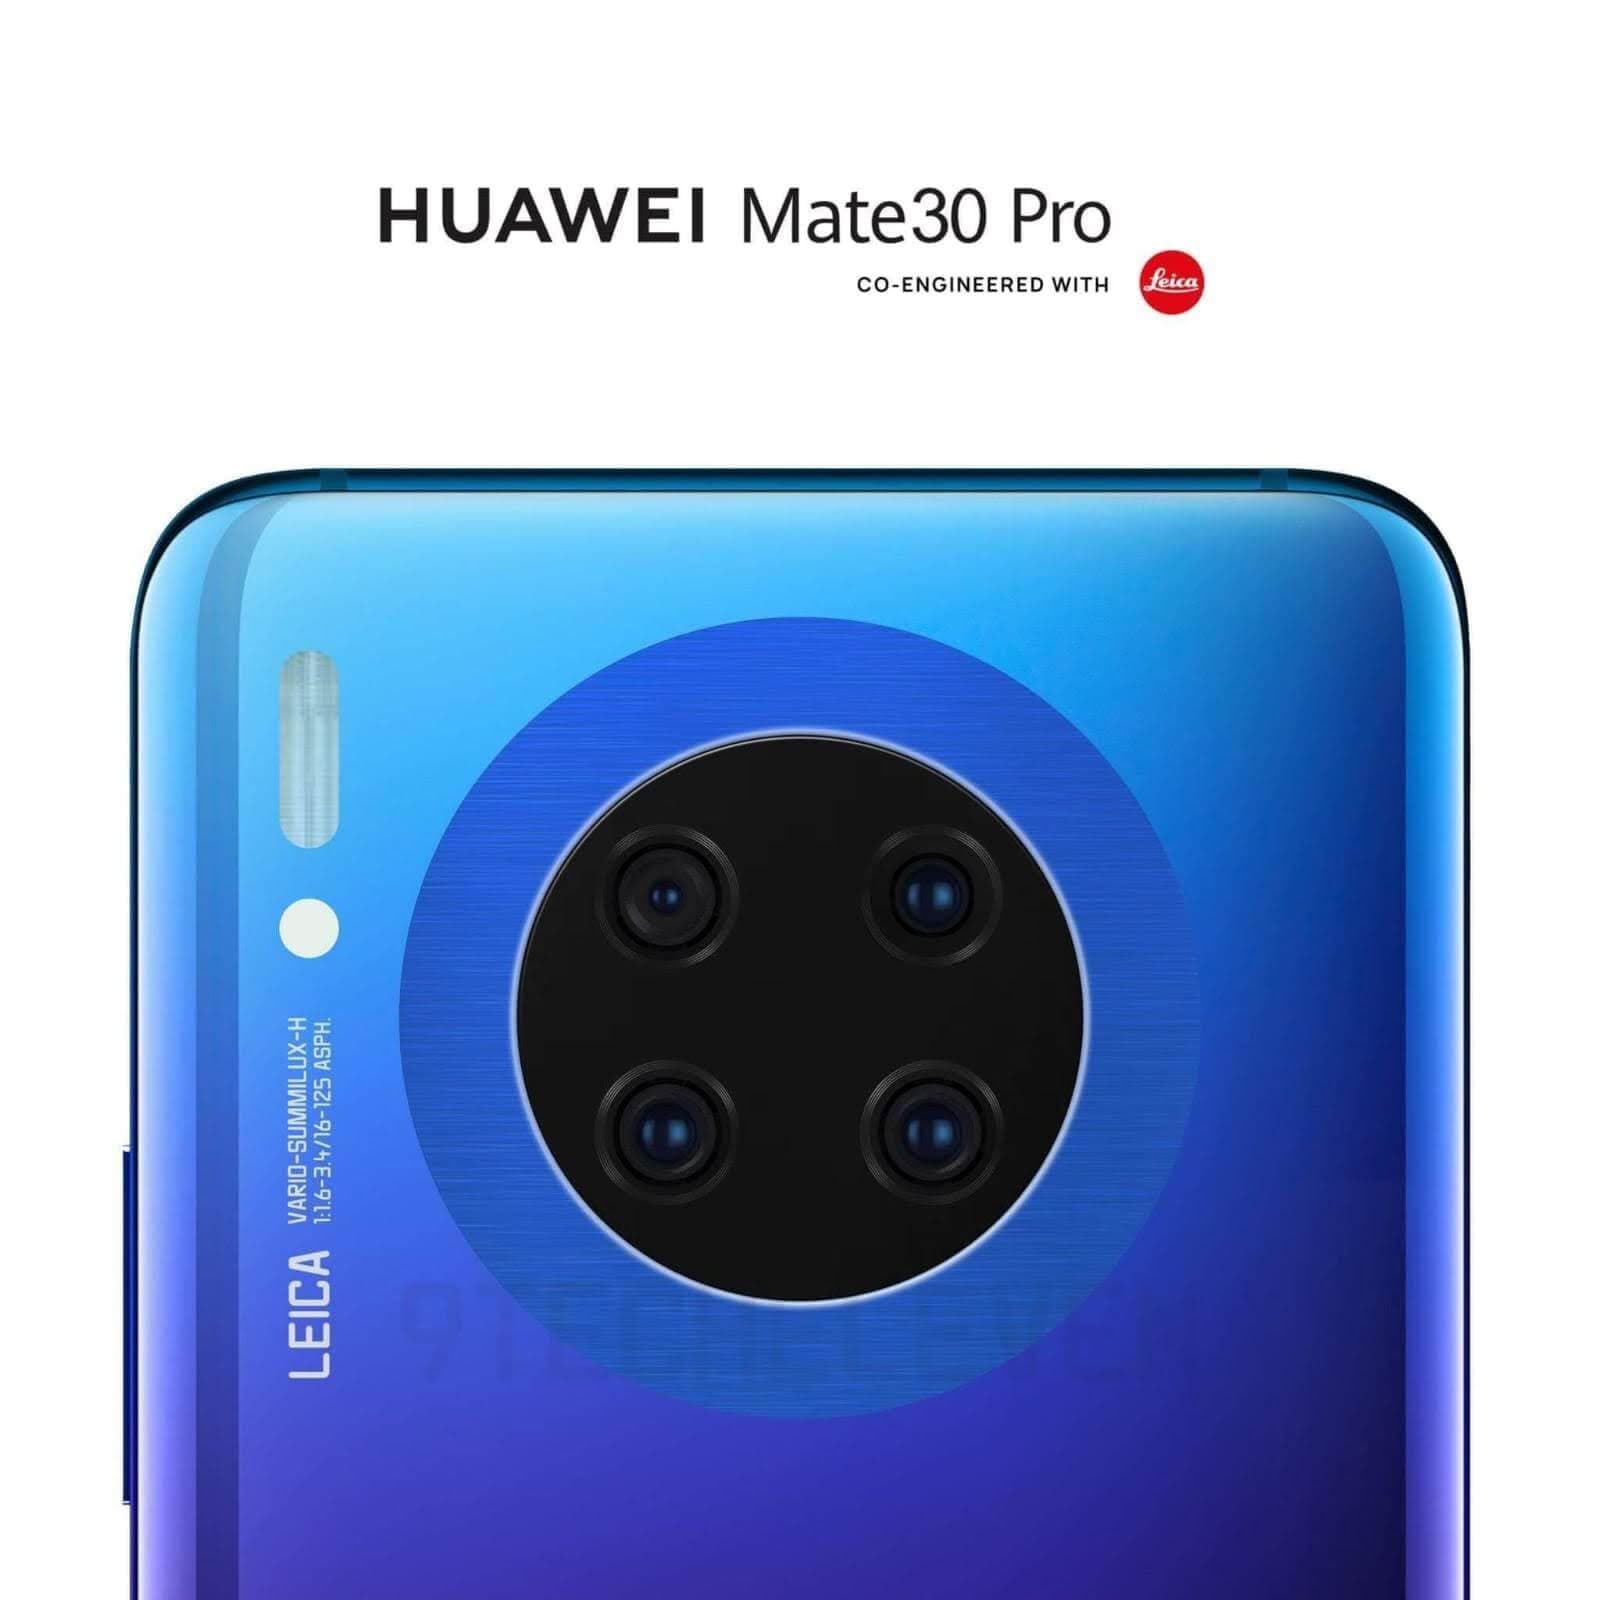 Huawei Mate 30 Pro: بعض العروض غير الرسمية تتناقض مع بعضها البعض (الصورة) 3